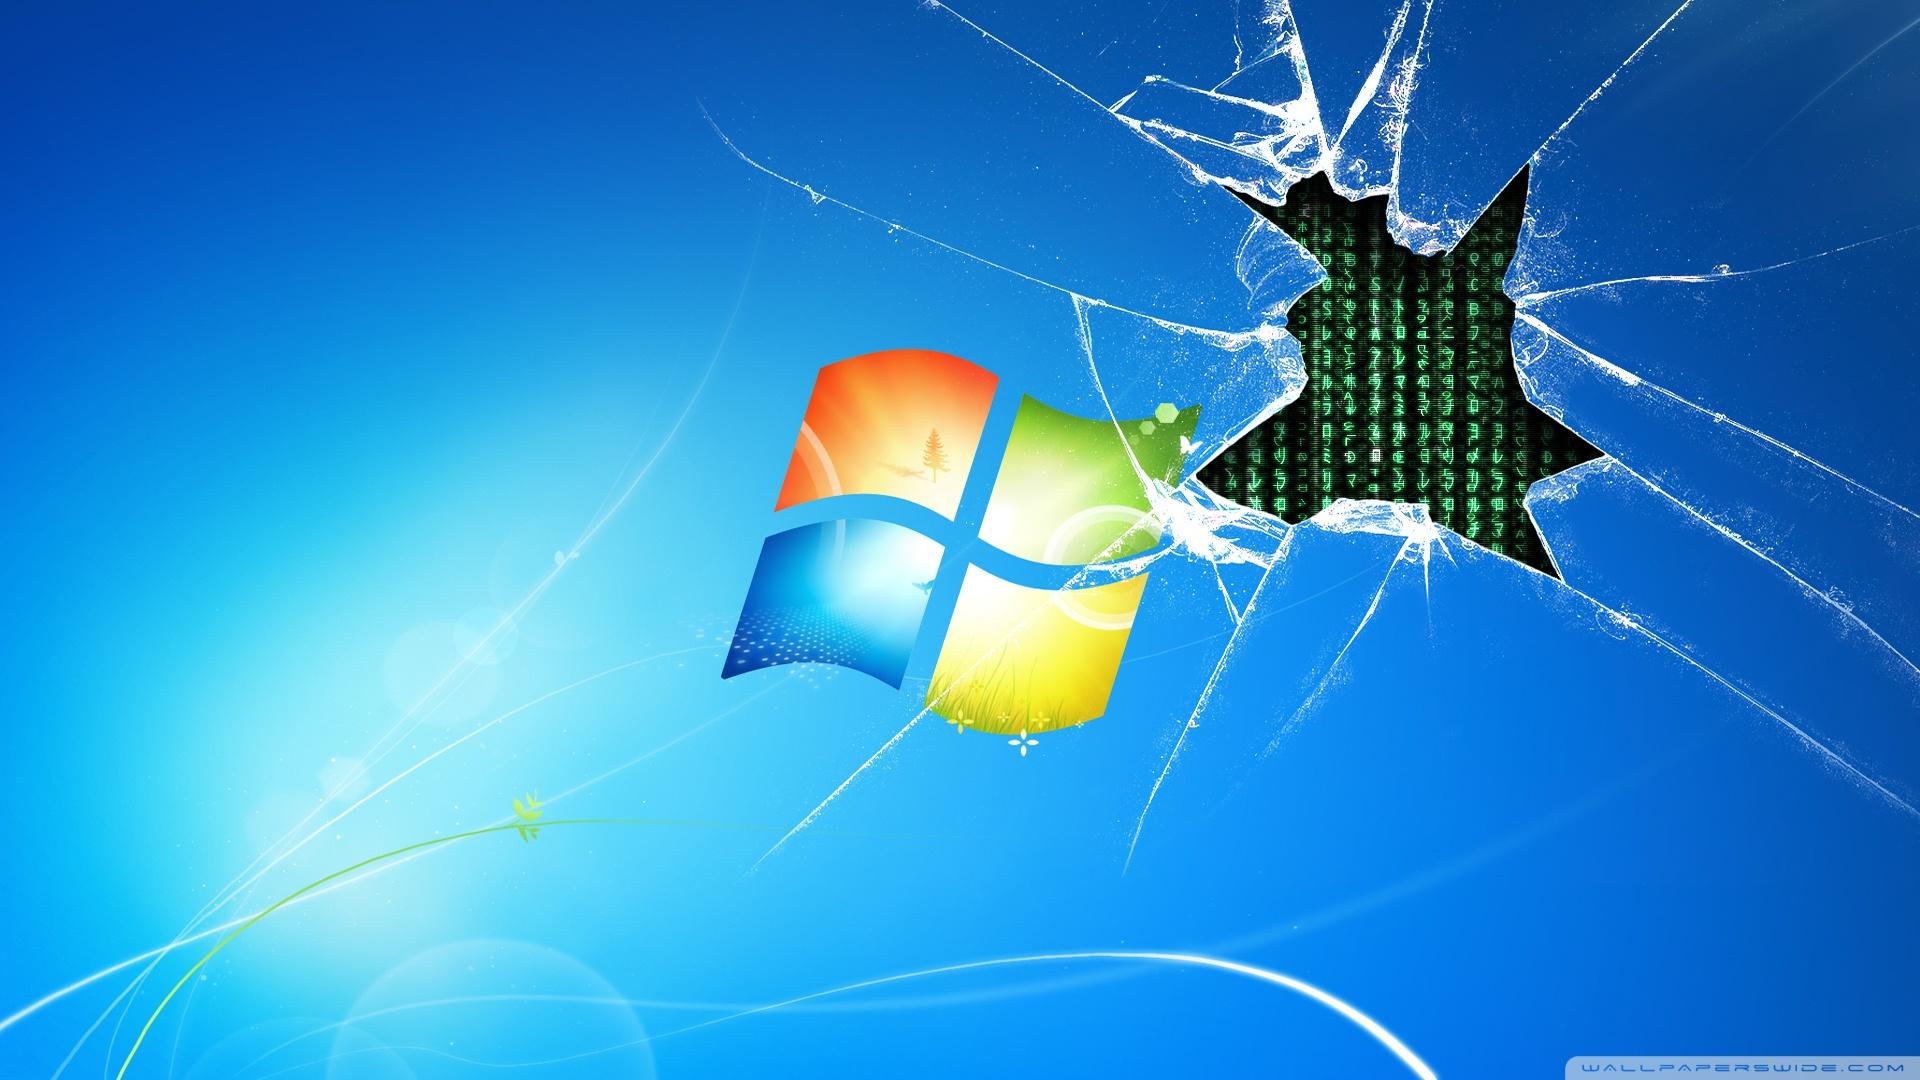 Windows 7 runs on the Matrix [Wallpaper]